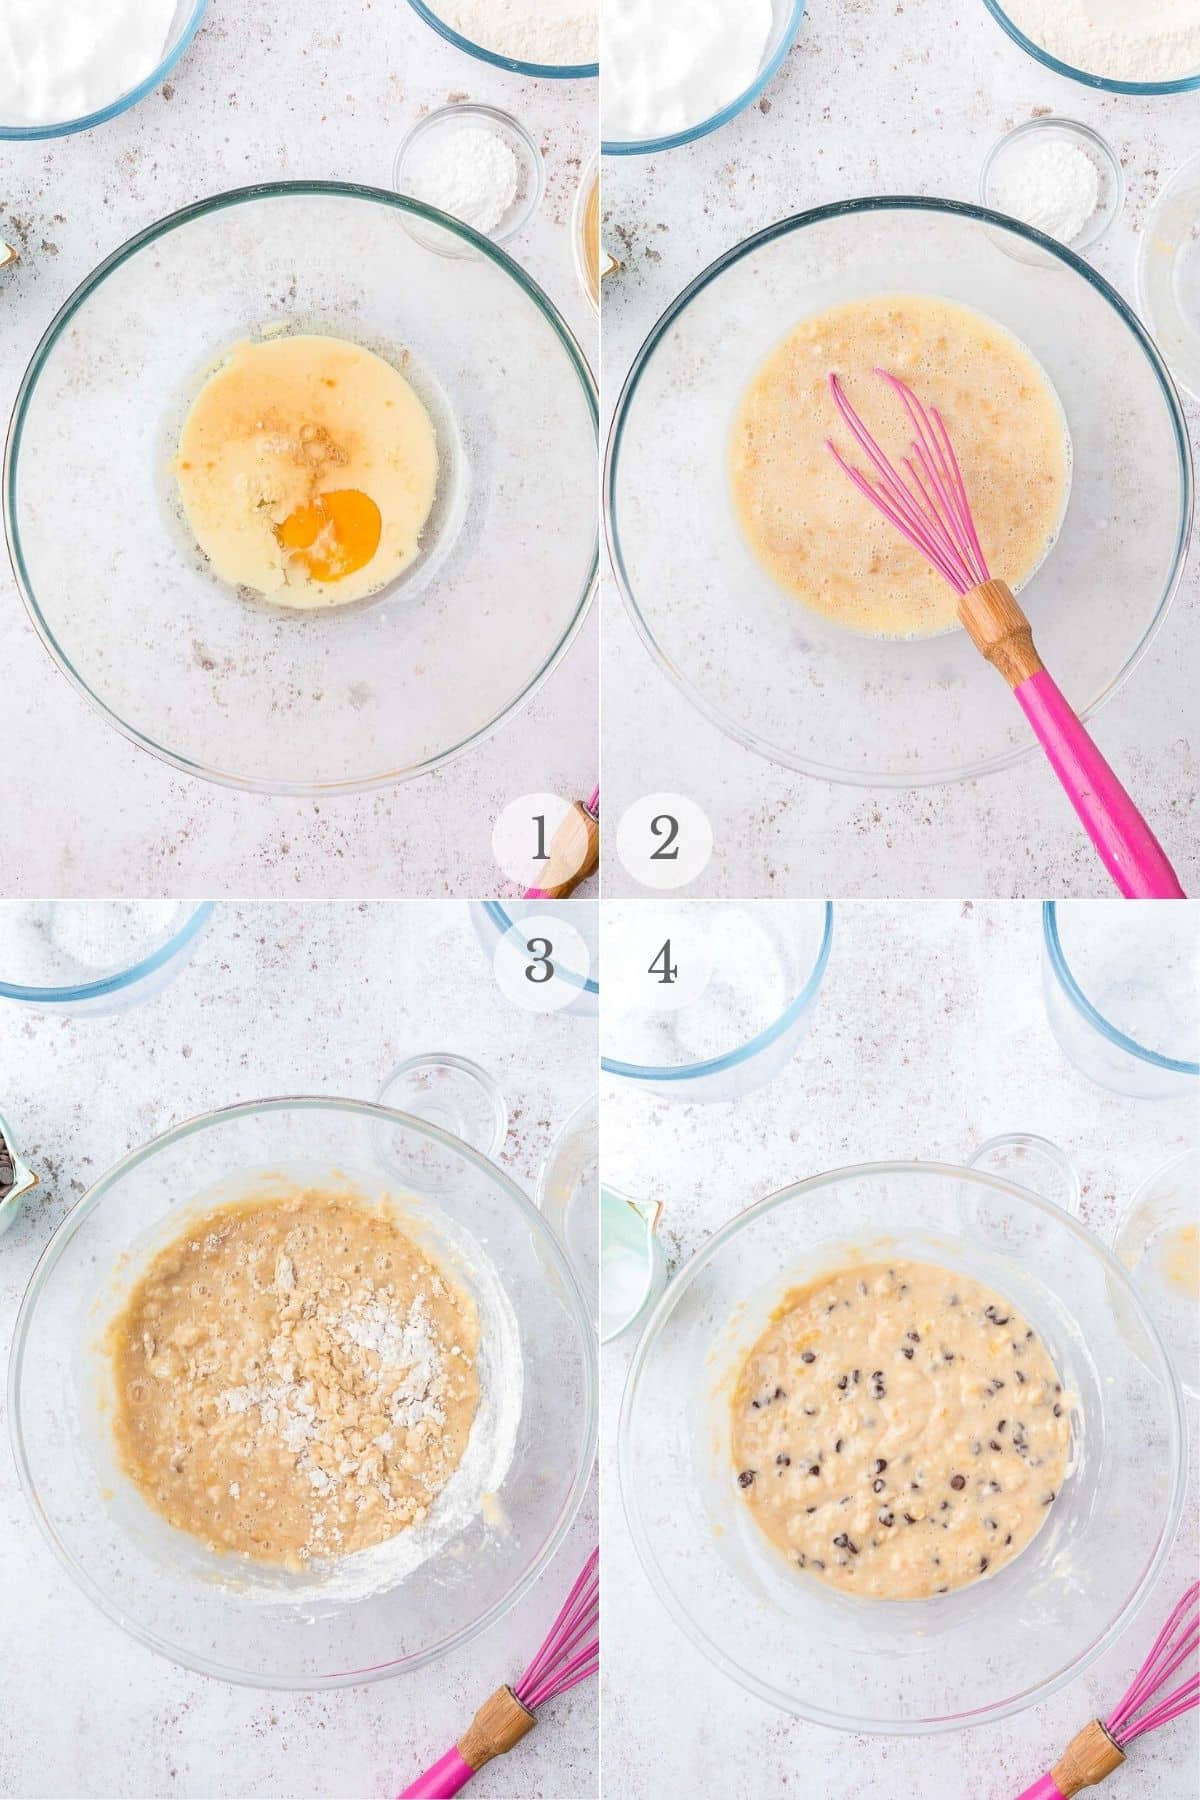 banana chocolate chip muffins recipe steps 1-4